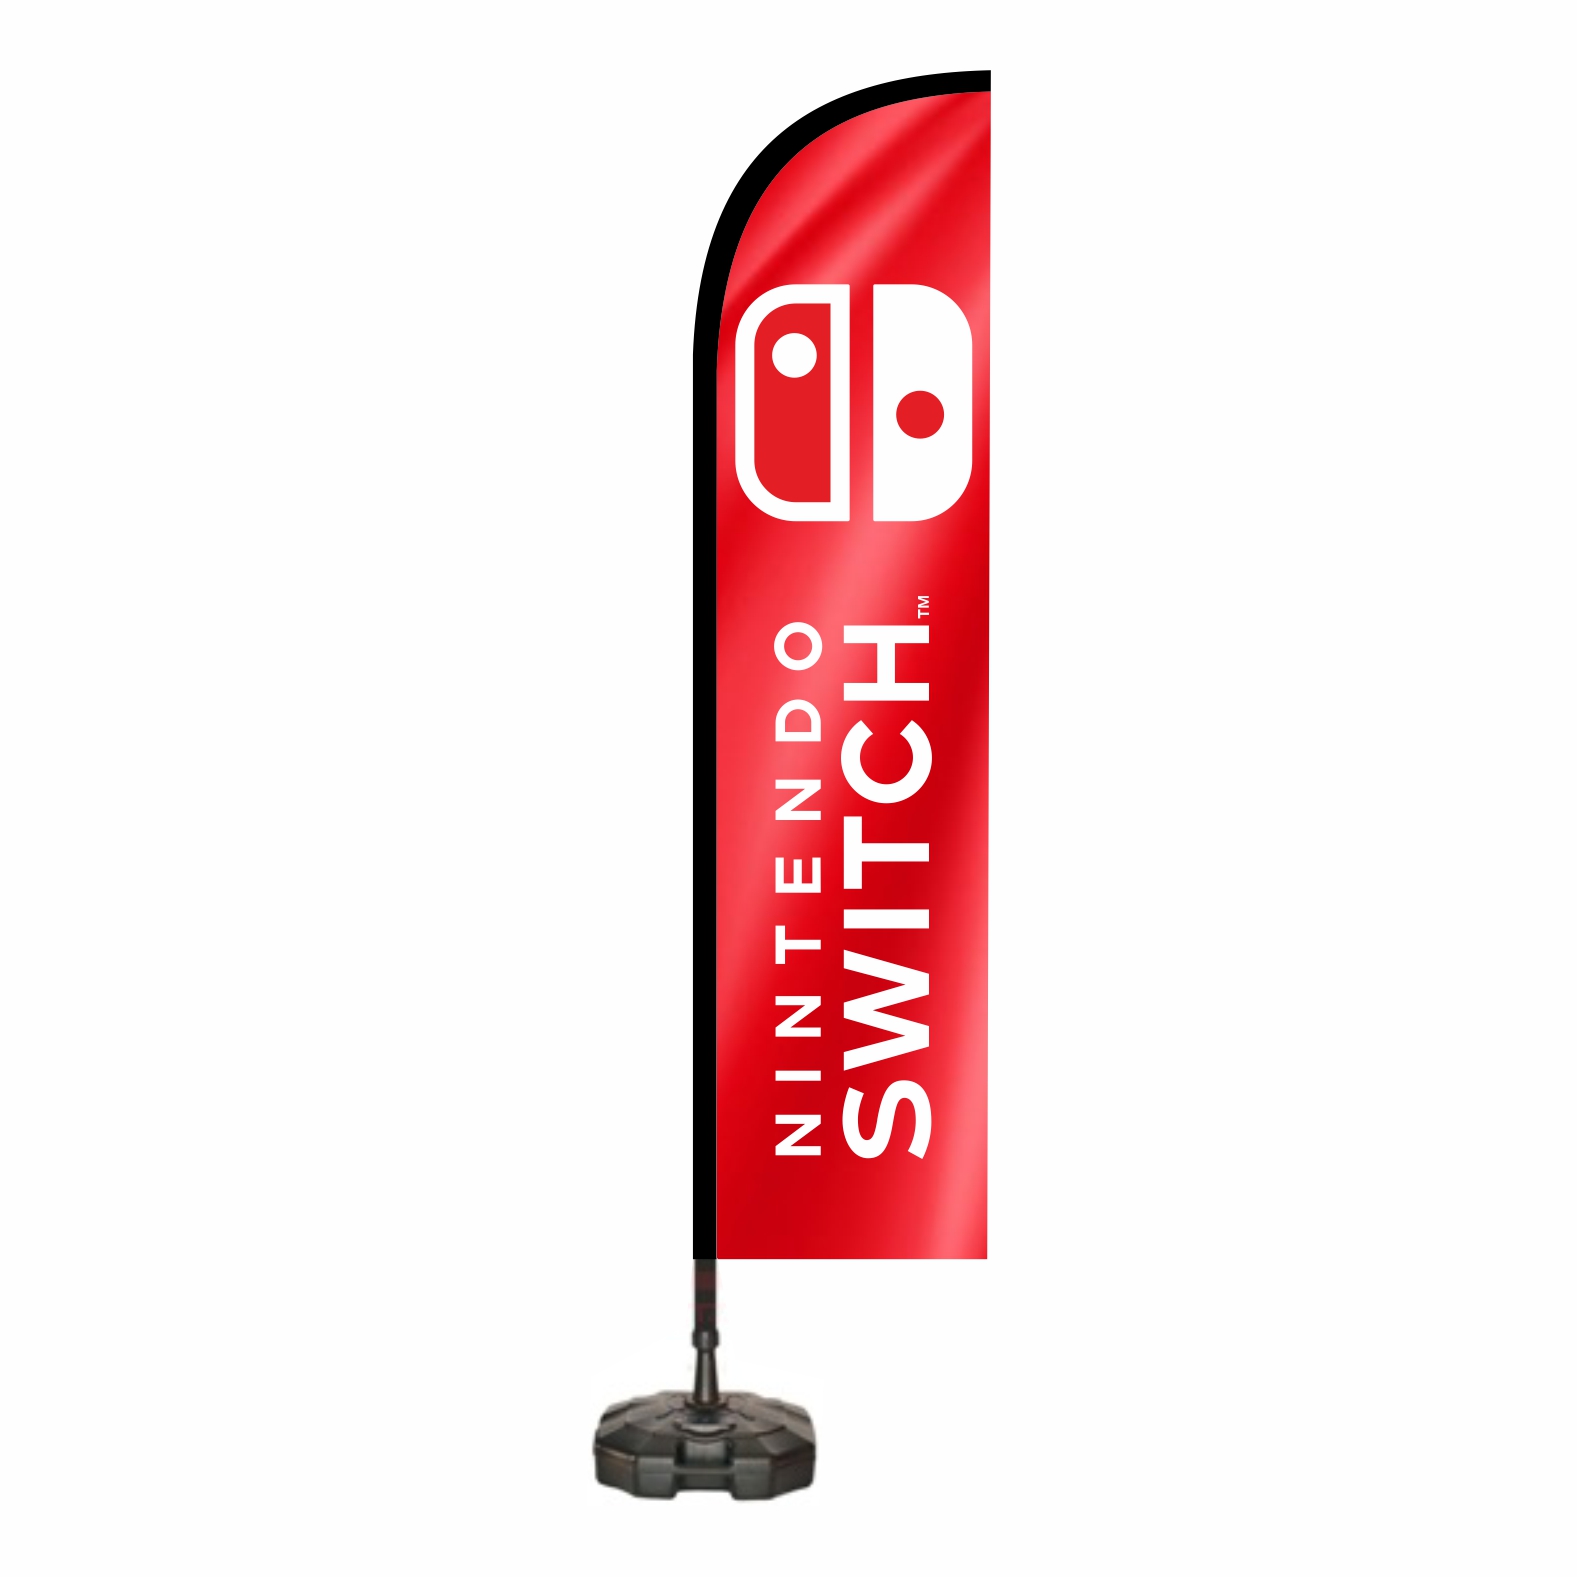 Nintendo Switch Cadde Bayra Sat Yeri